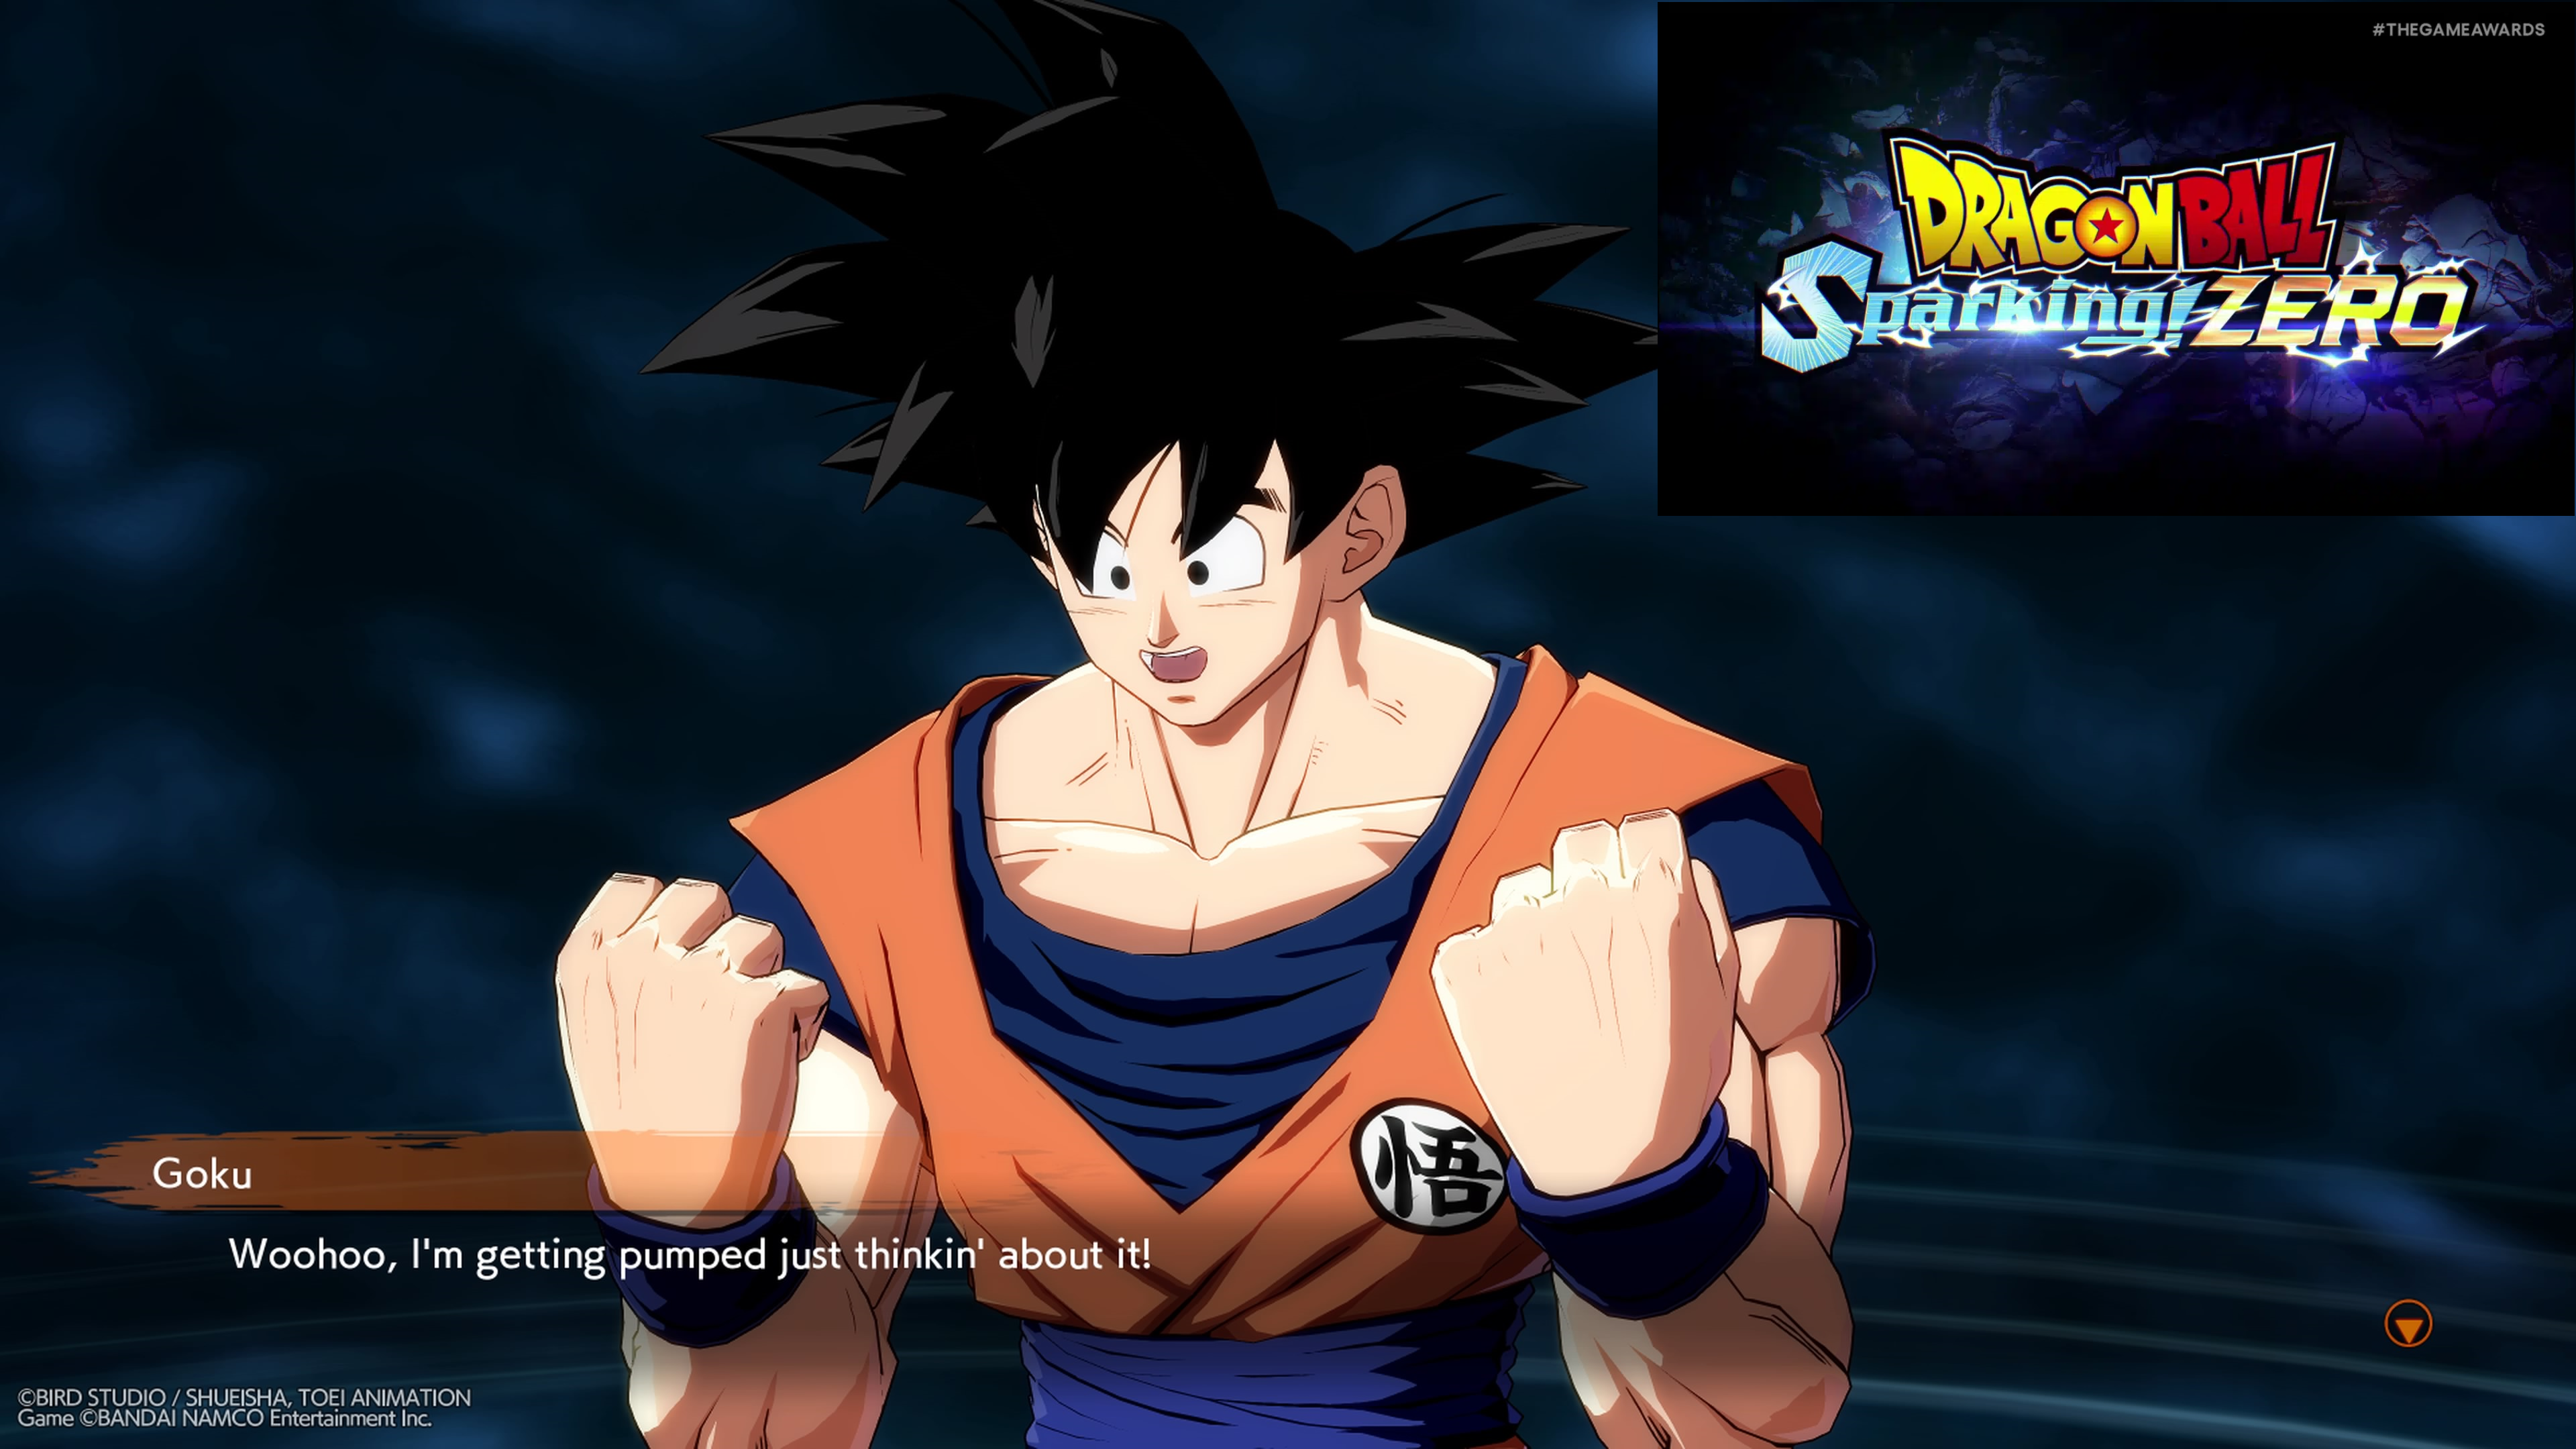 Goku's ready for Dragon Ball: Sparking! ZERO by L-Dawg211 on